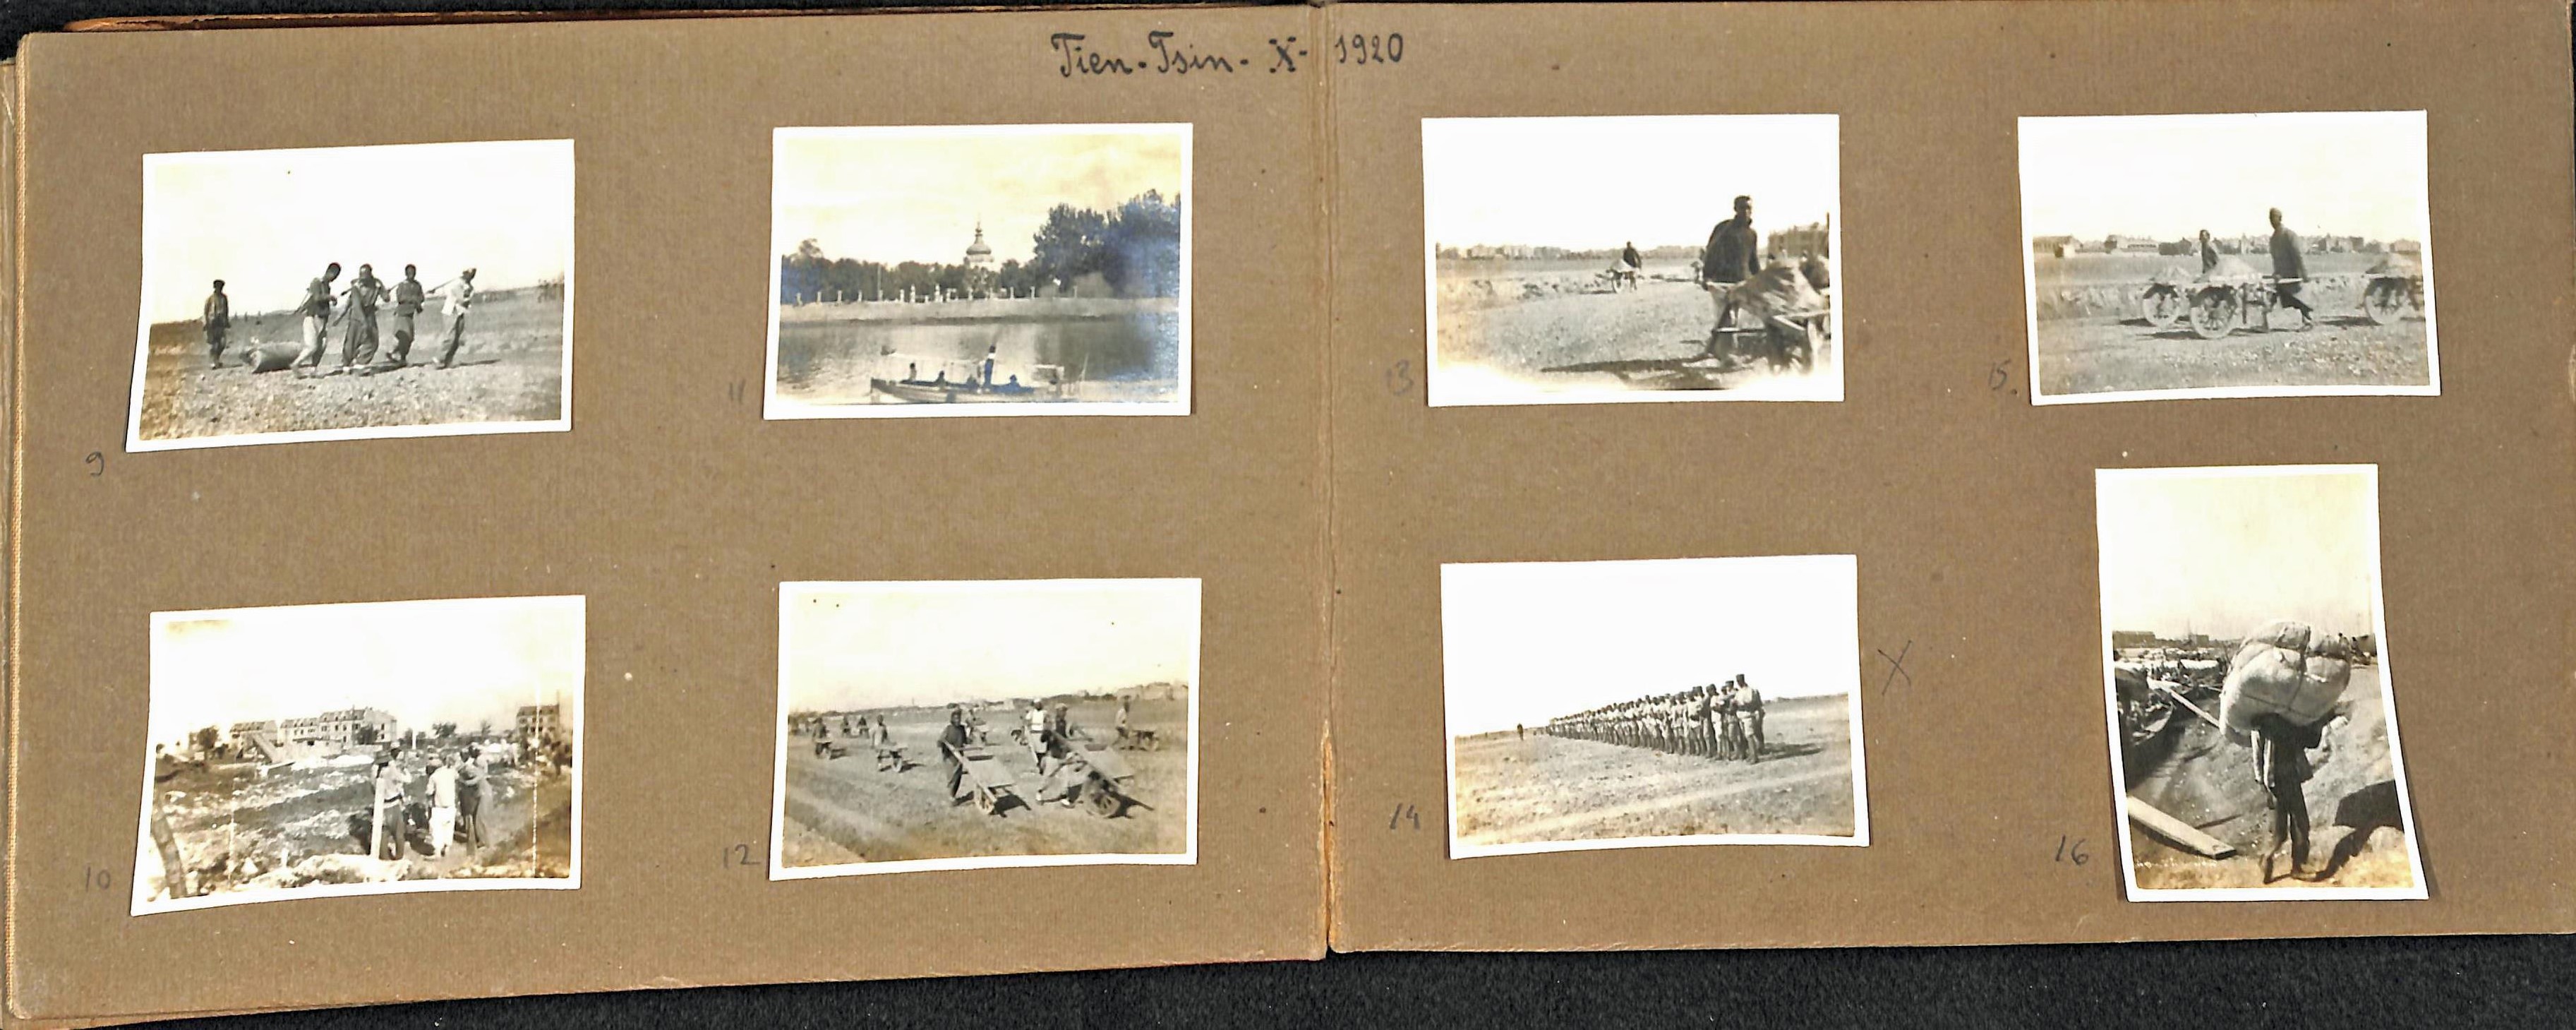 album fotografico - tientsin 1920